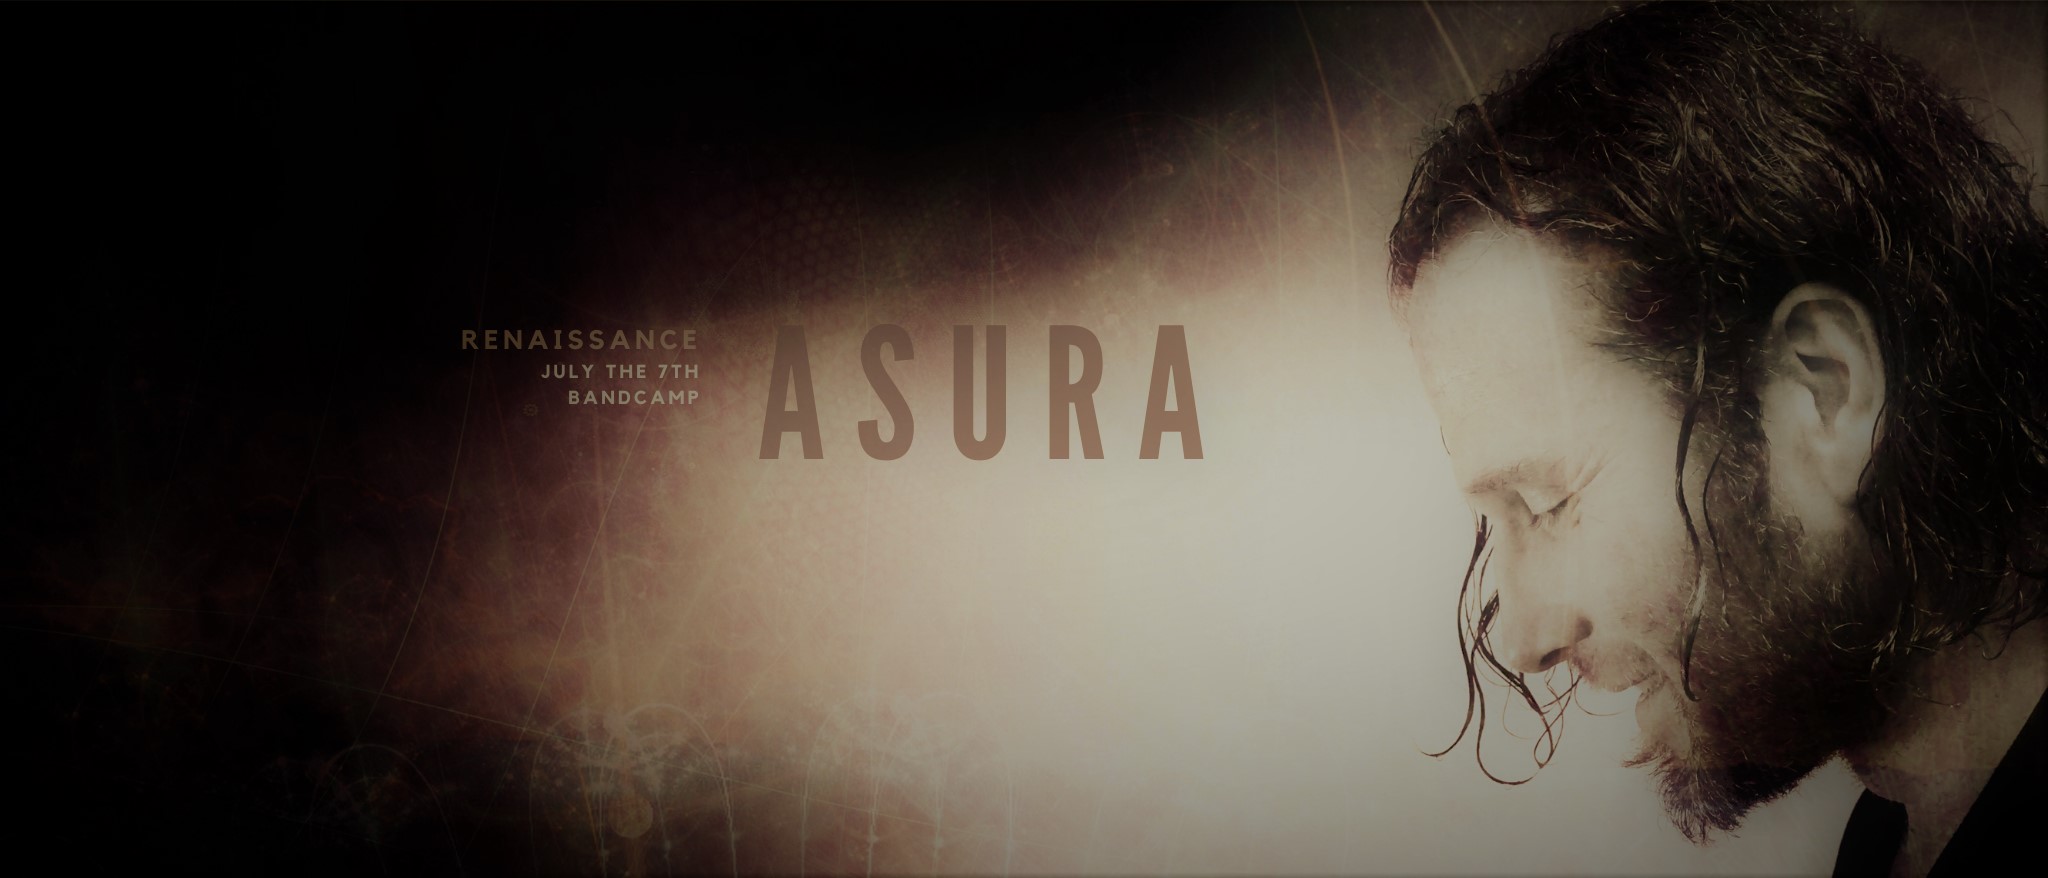 ASURA – Renaissance Album Review